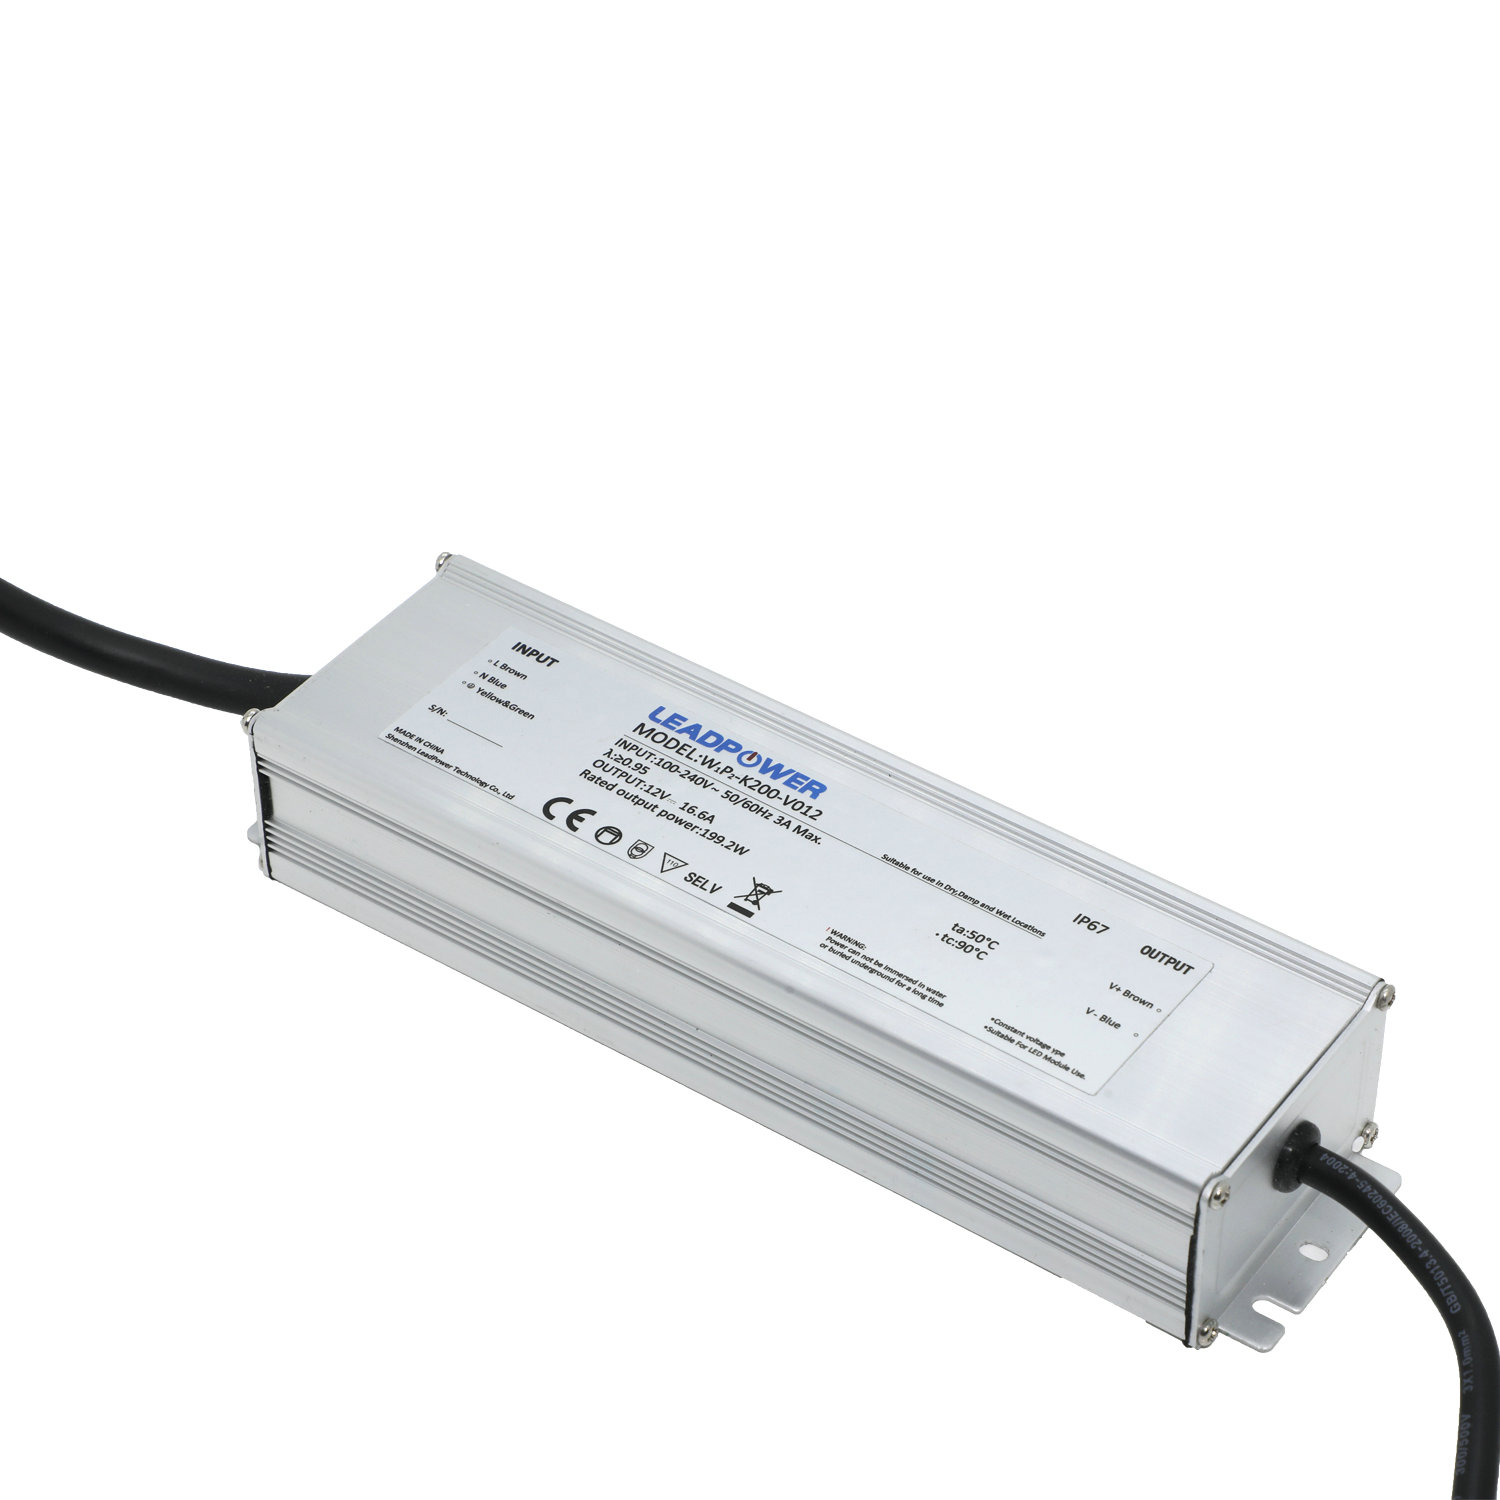 WAP-K200 Series Waterproof LED Power Supply